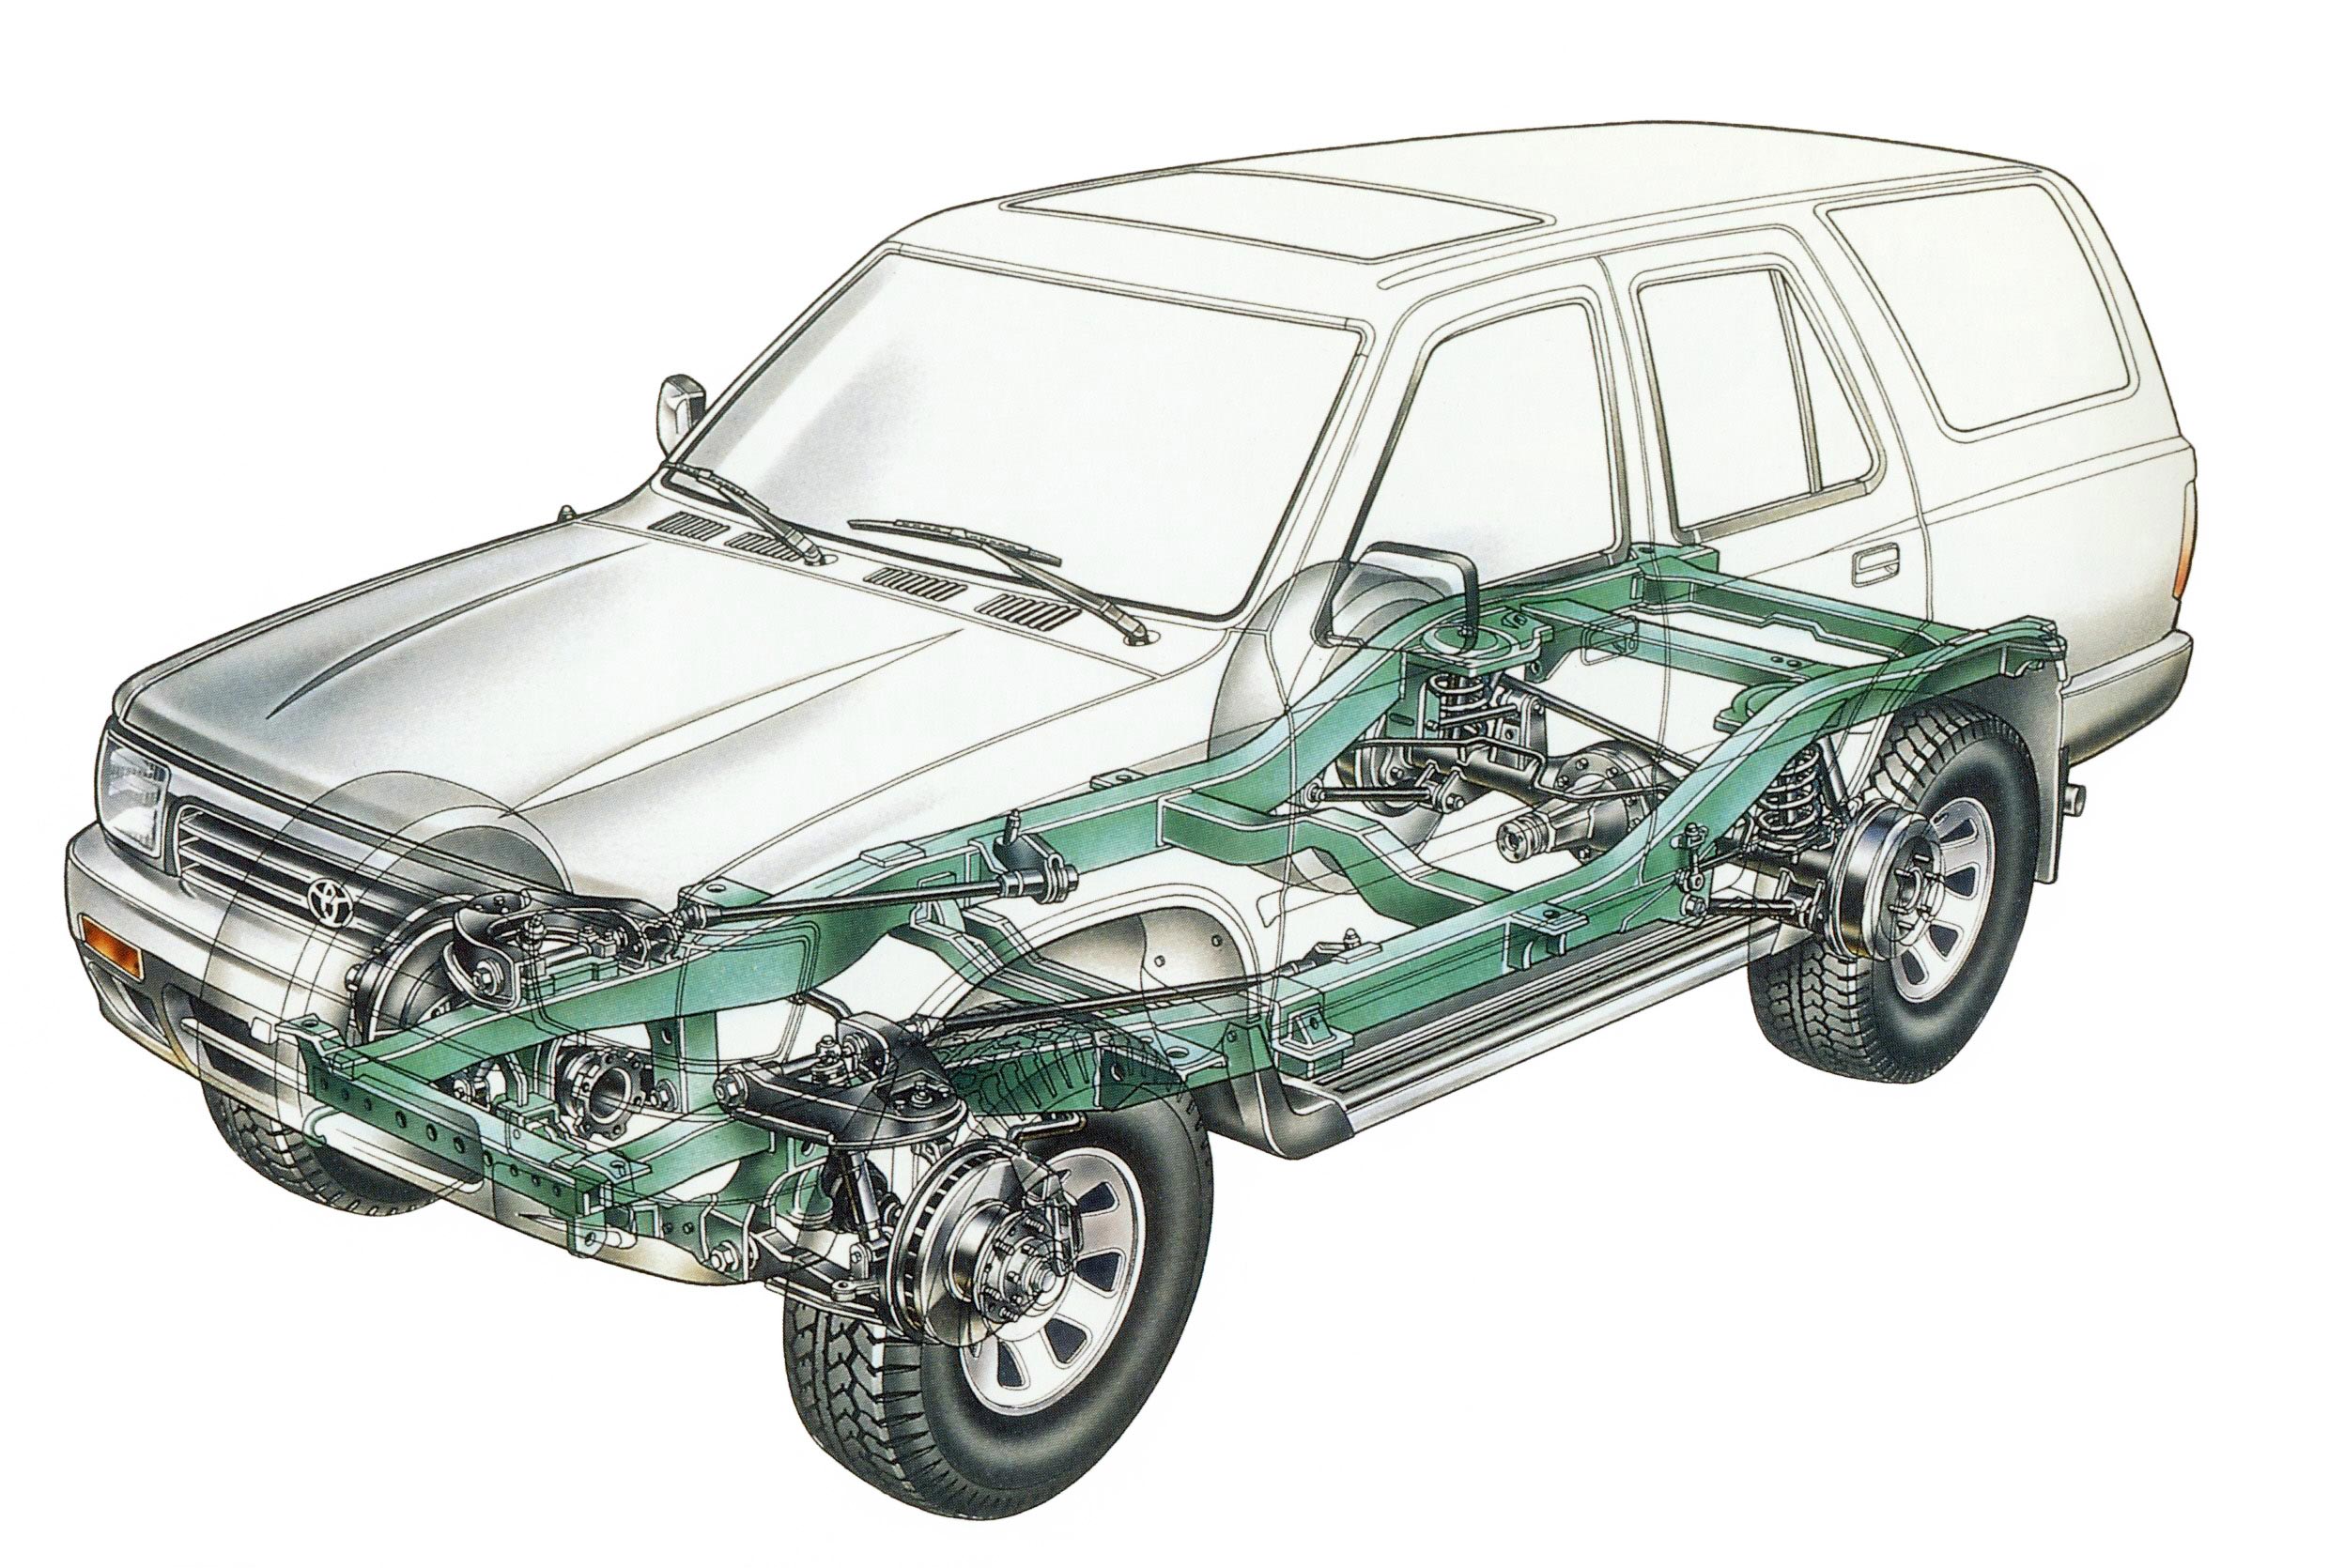 Toyota 4Runner cutaway drawing